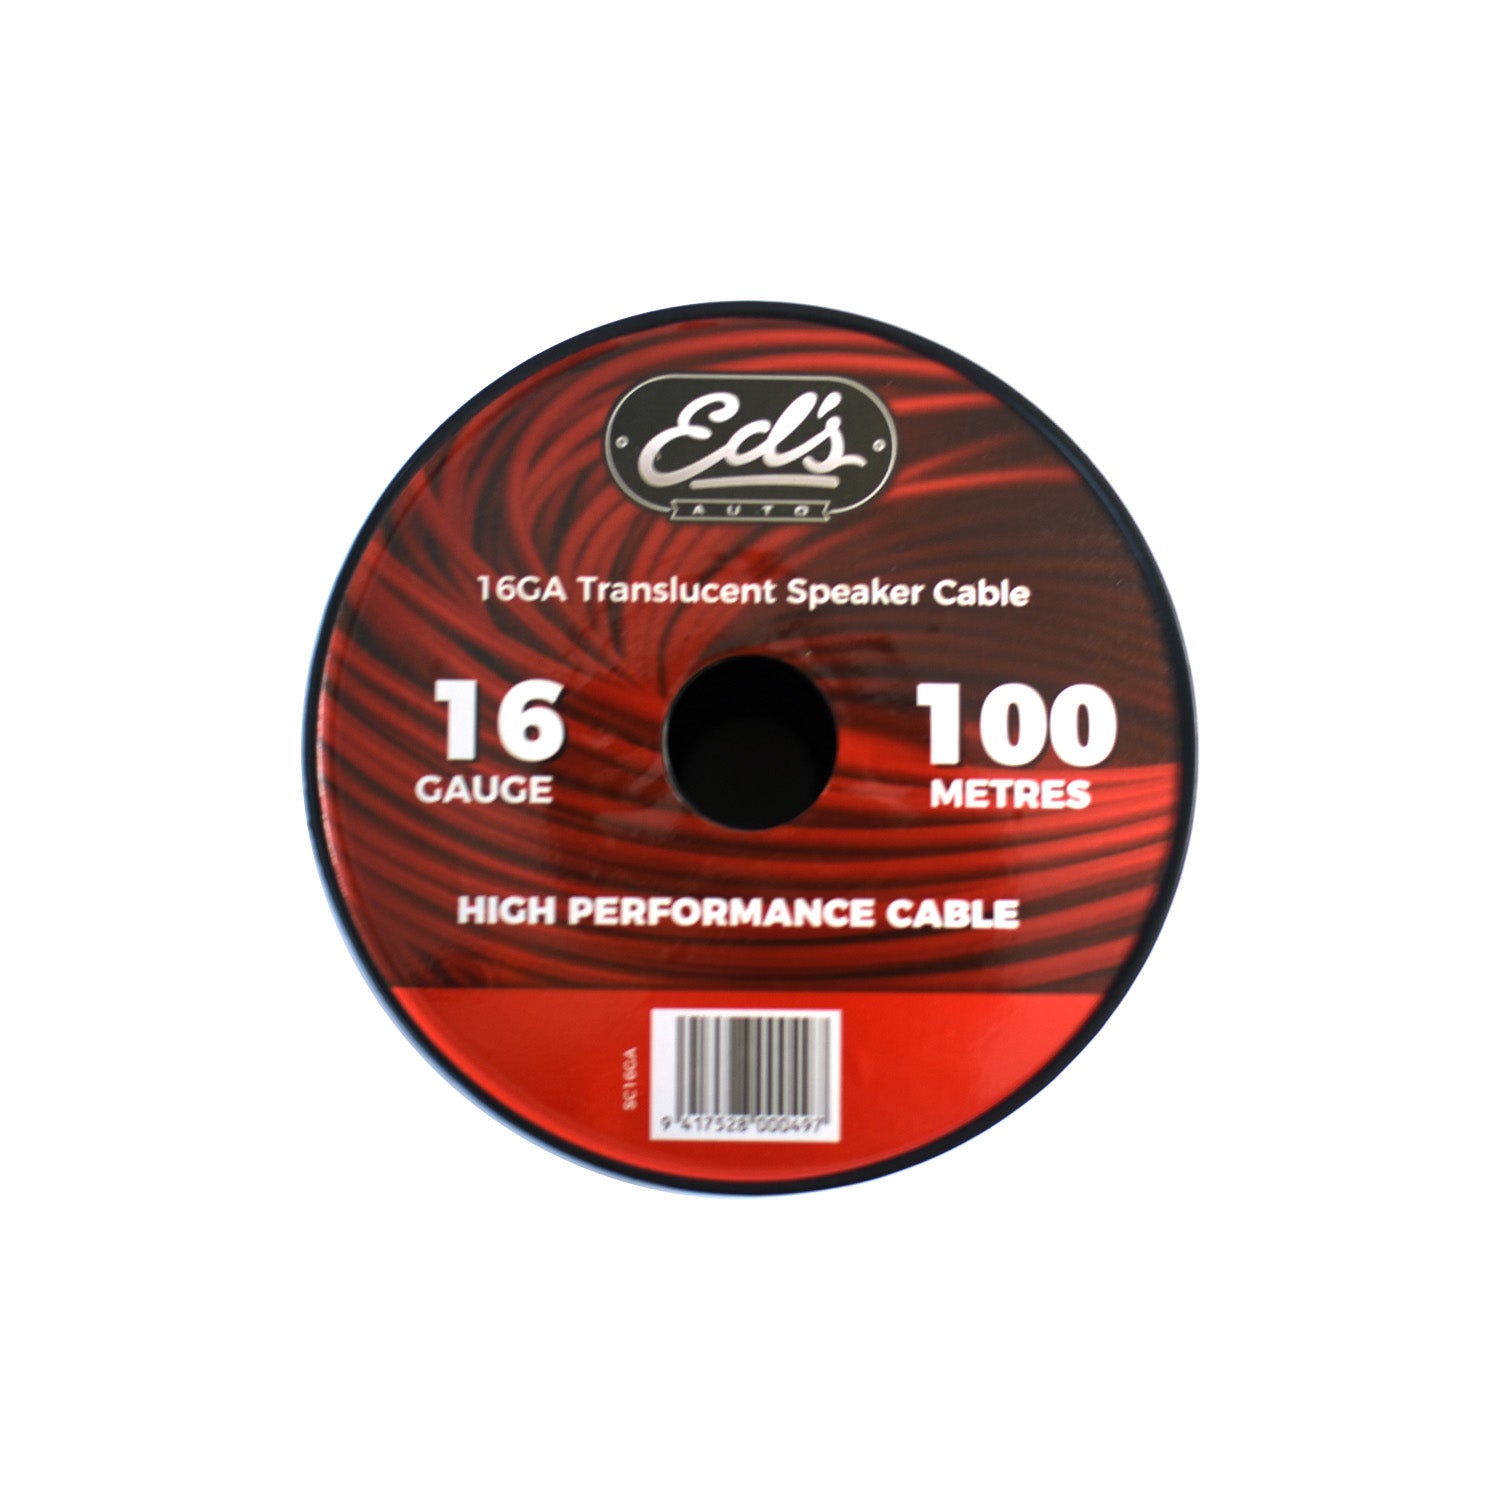 Eds 16 Gauge Cca Speaker Cable Matt Flexible Translucent Clear 100M